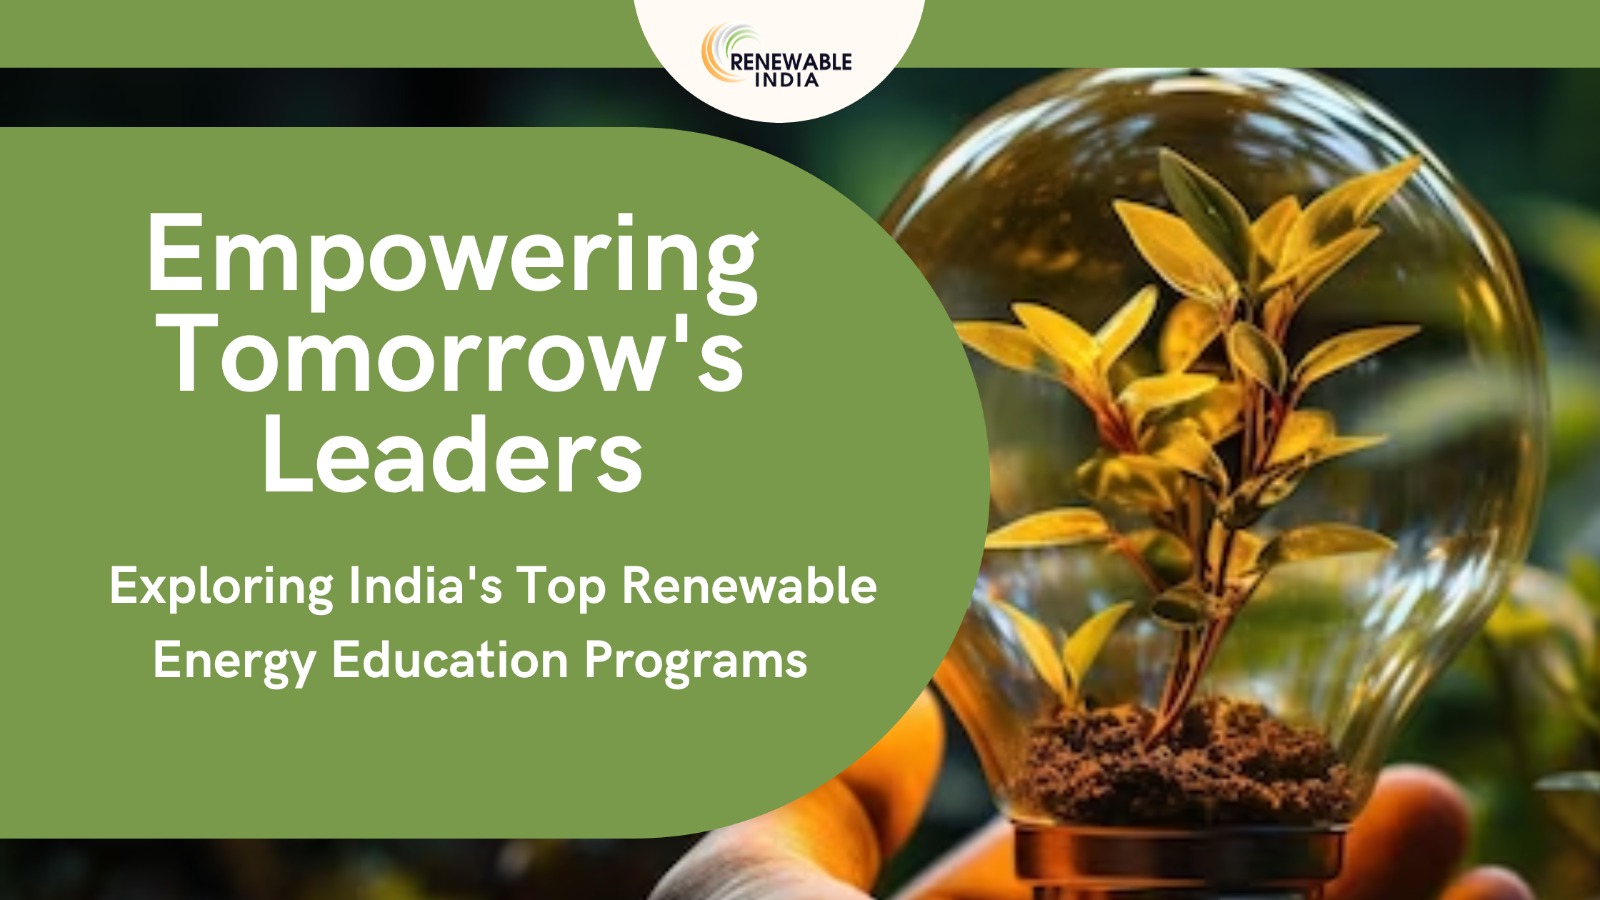 Leading Renewable Energy Programs in India